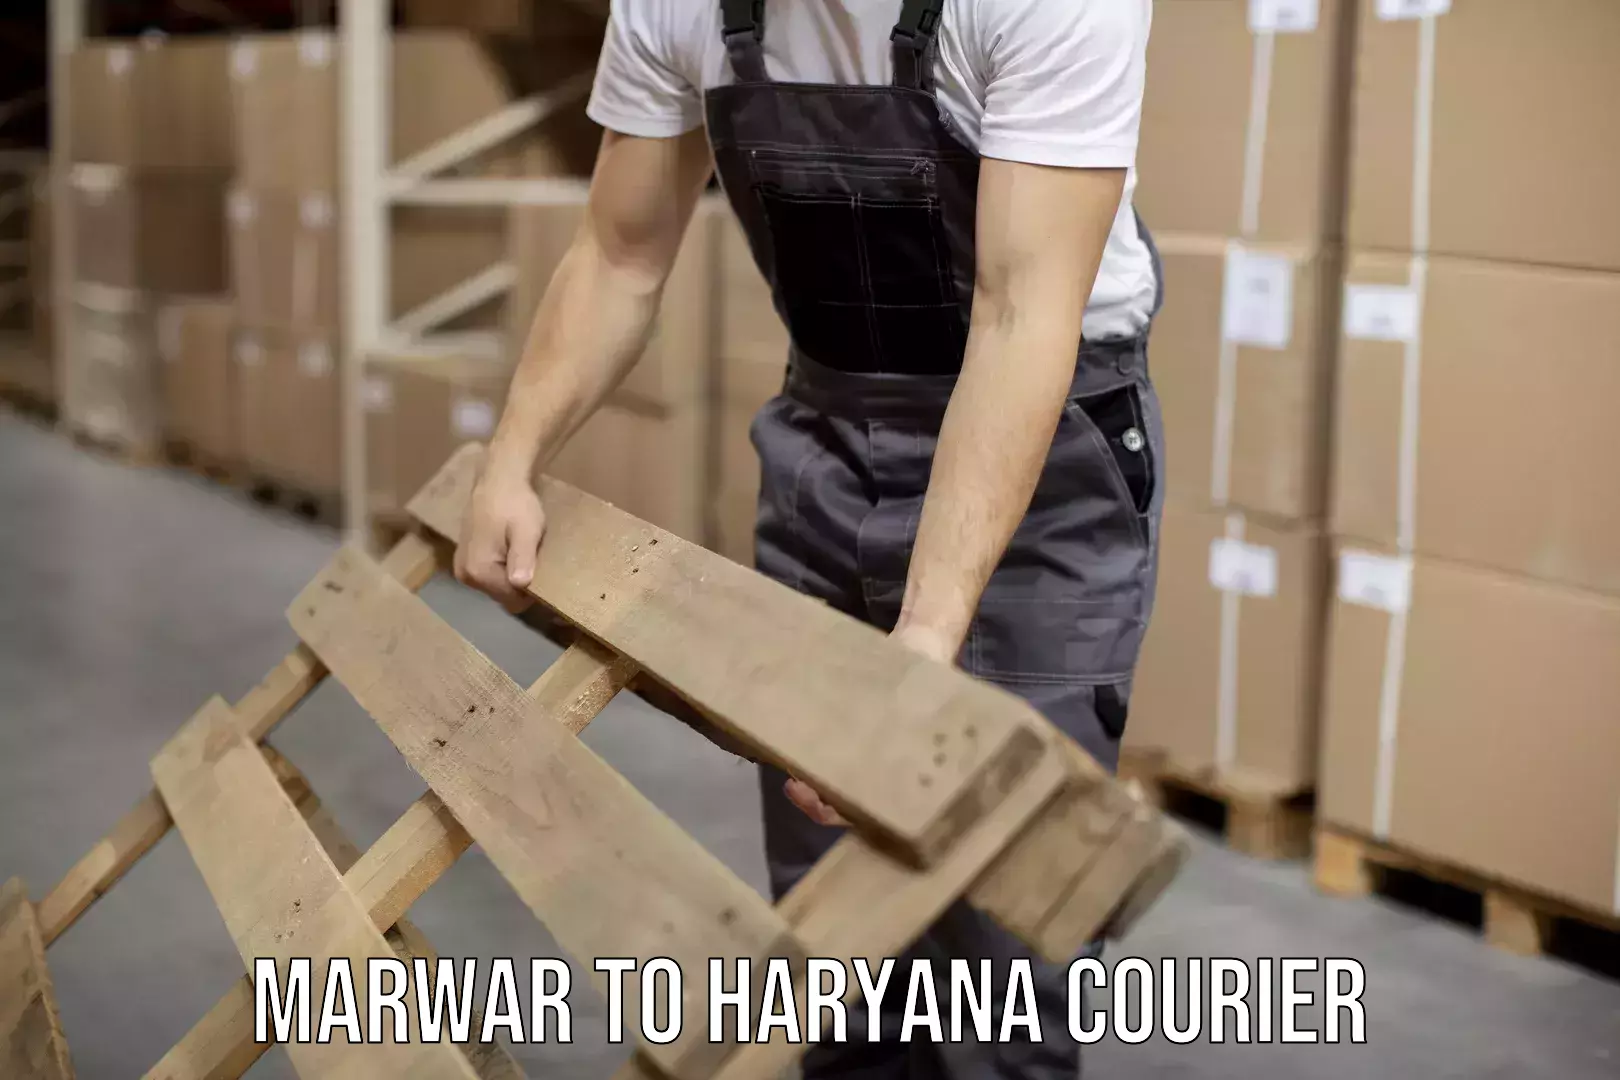 Courier service efficiency Marwar to Barwala